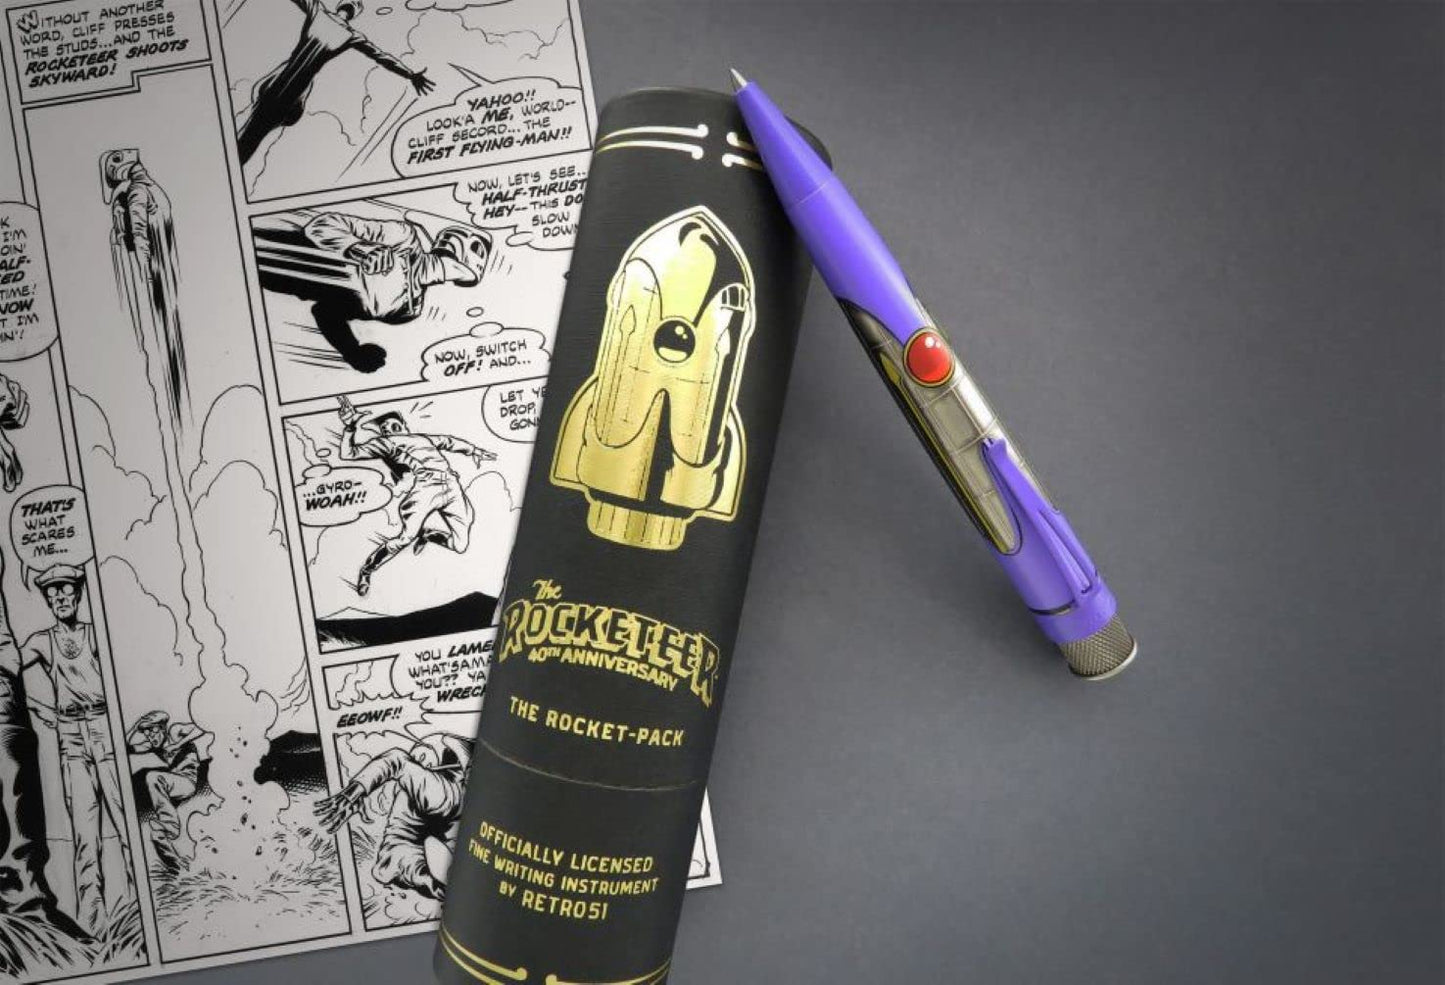 Retro 51 The Rocketeer Rocket-Pack Big Shot Rollerball Pen